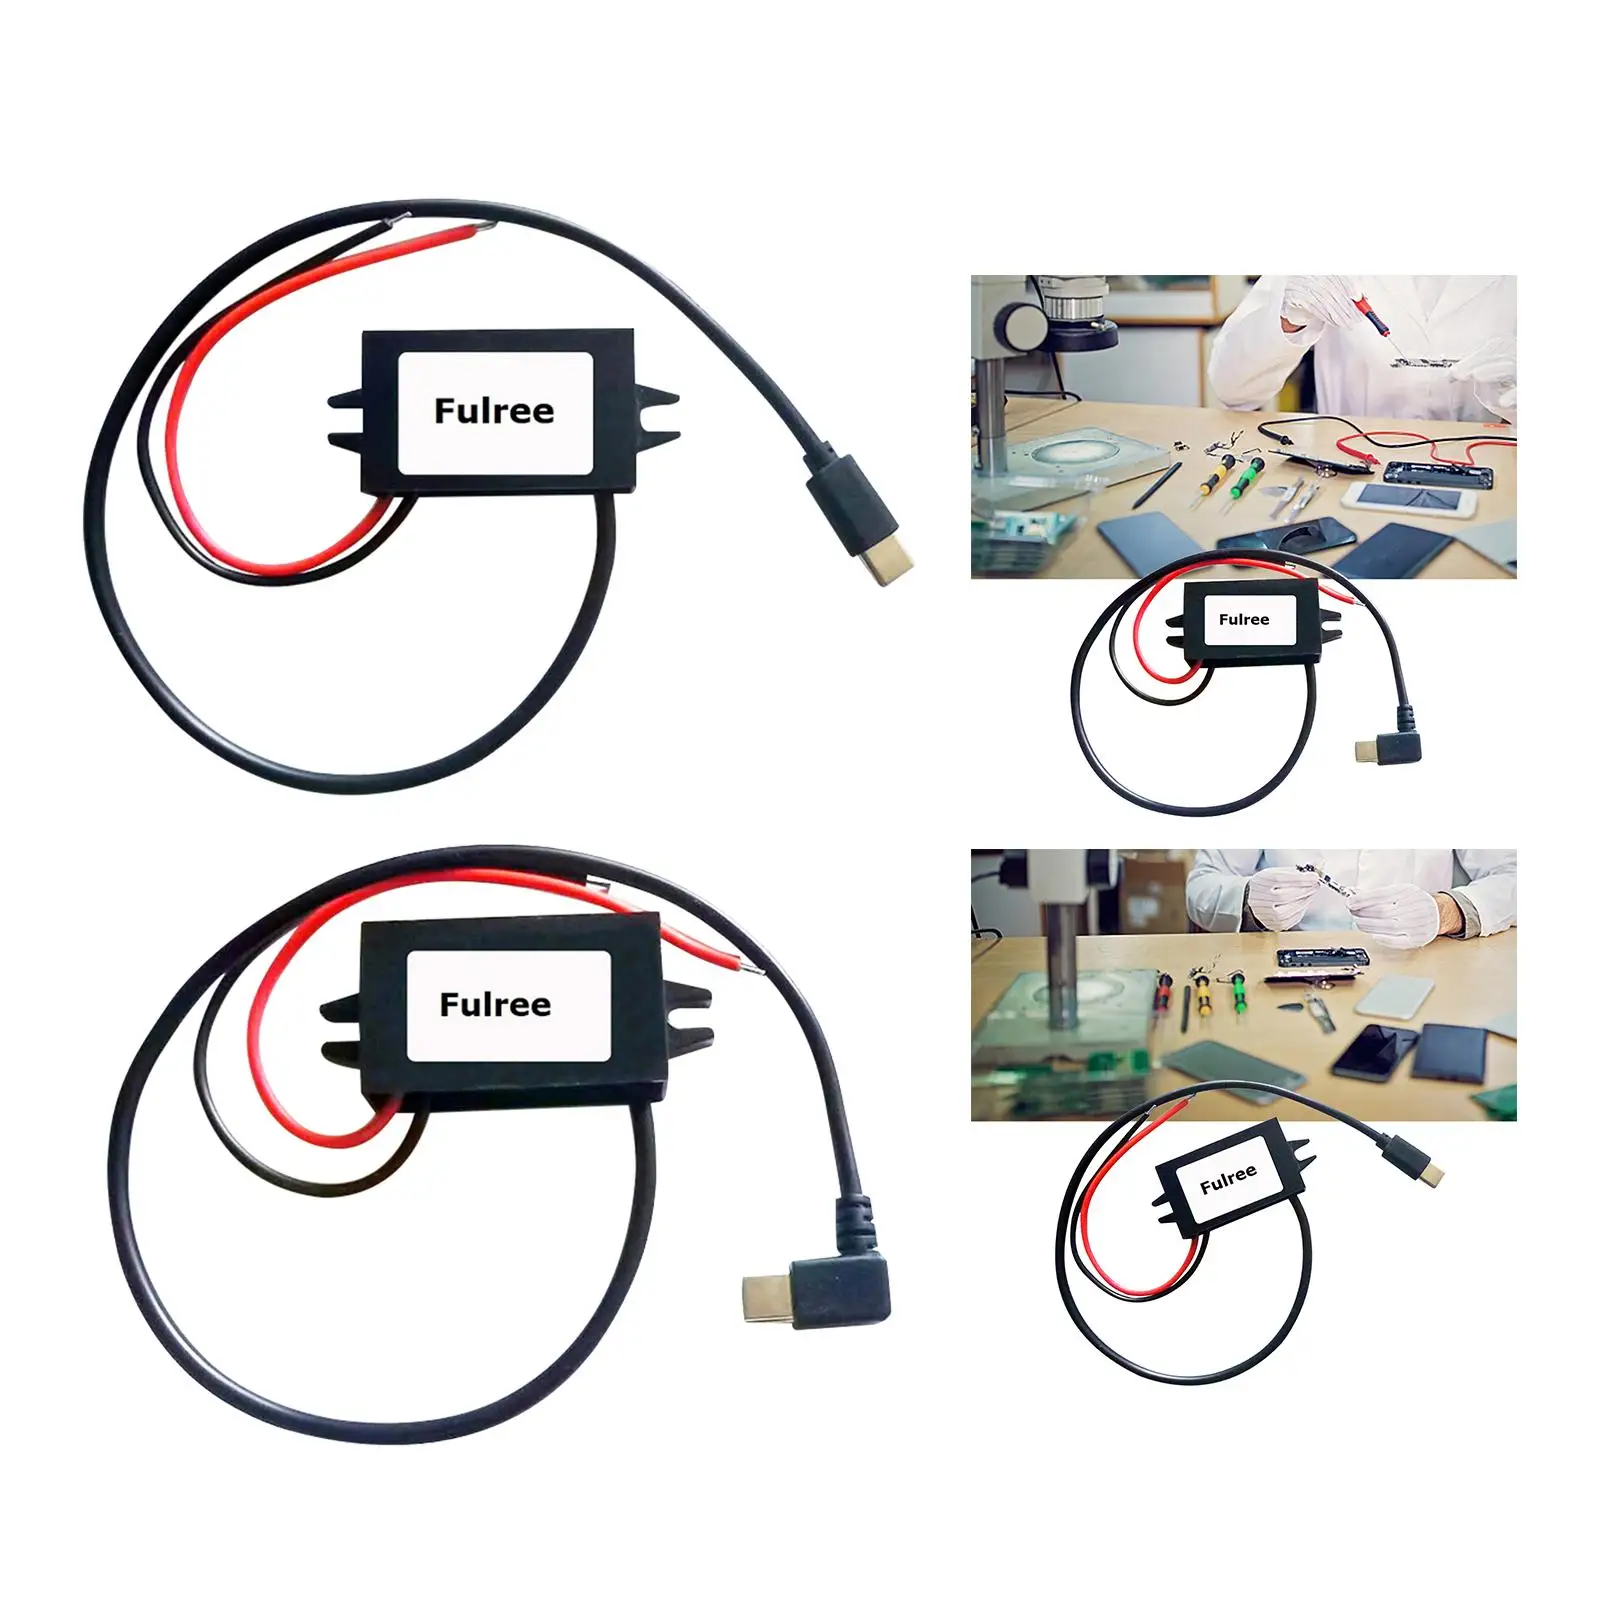 12V to 5V Converter Reduced Voltage Regulator Power Adapter Converter for Electronic Device